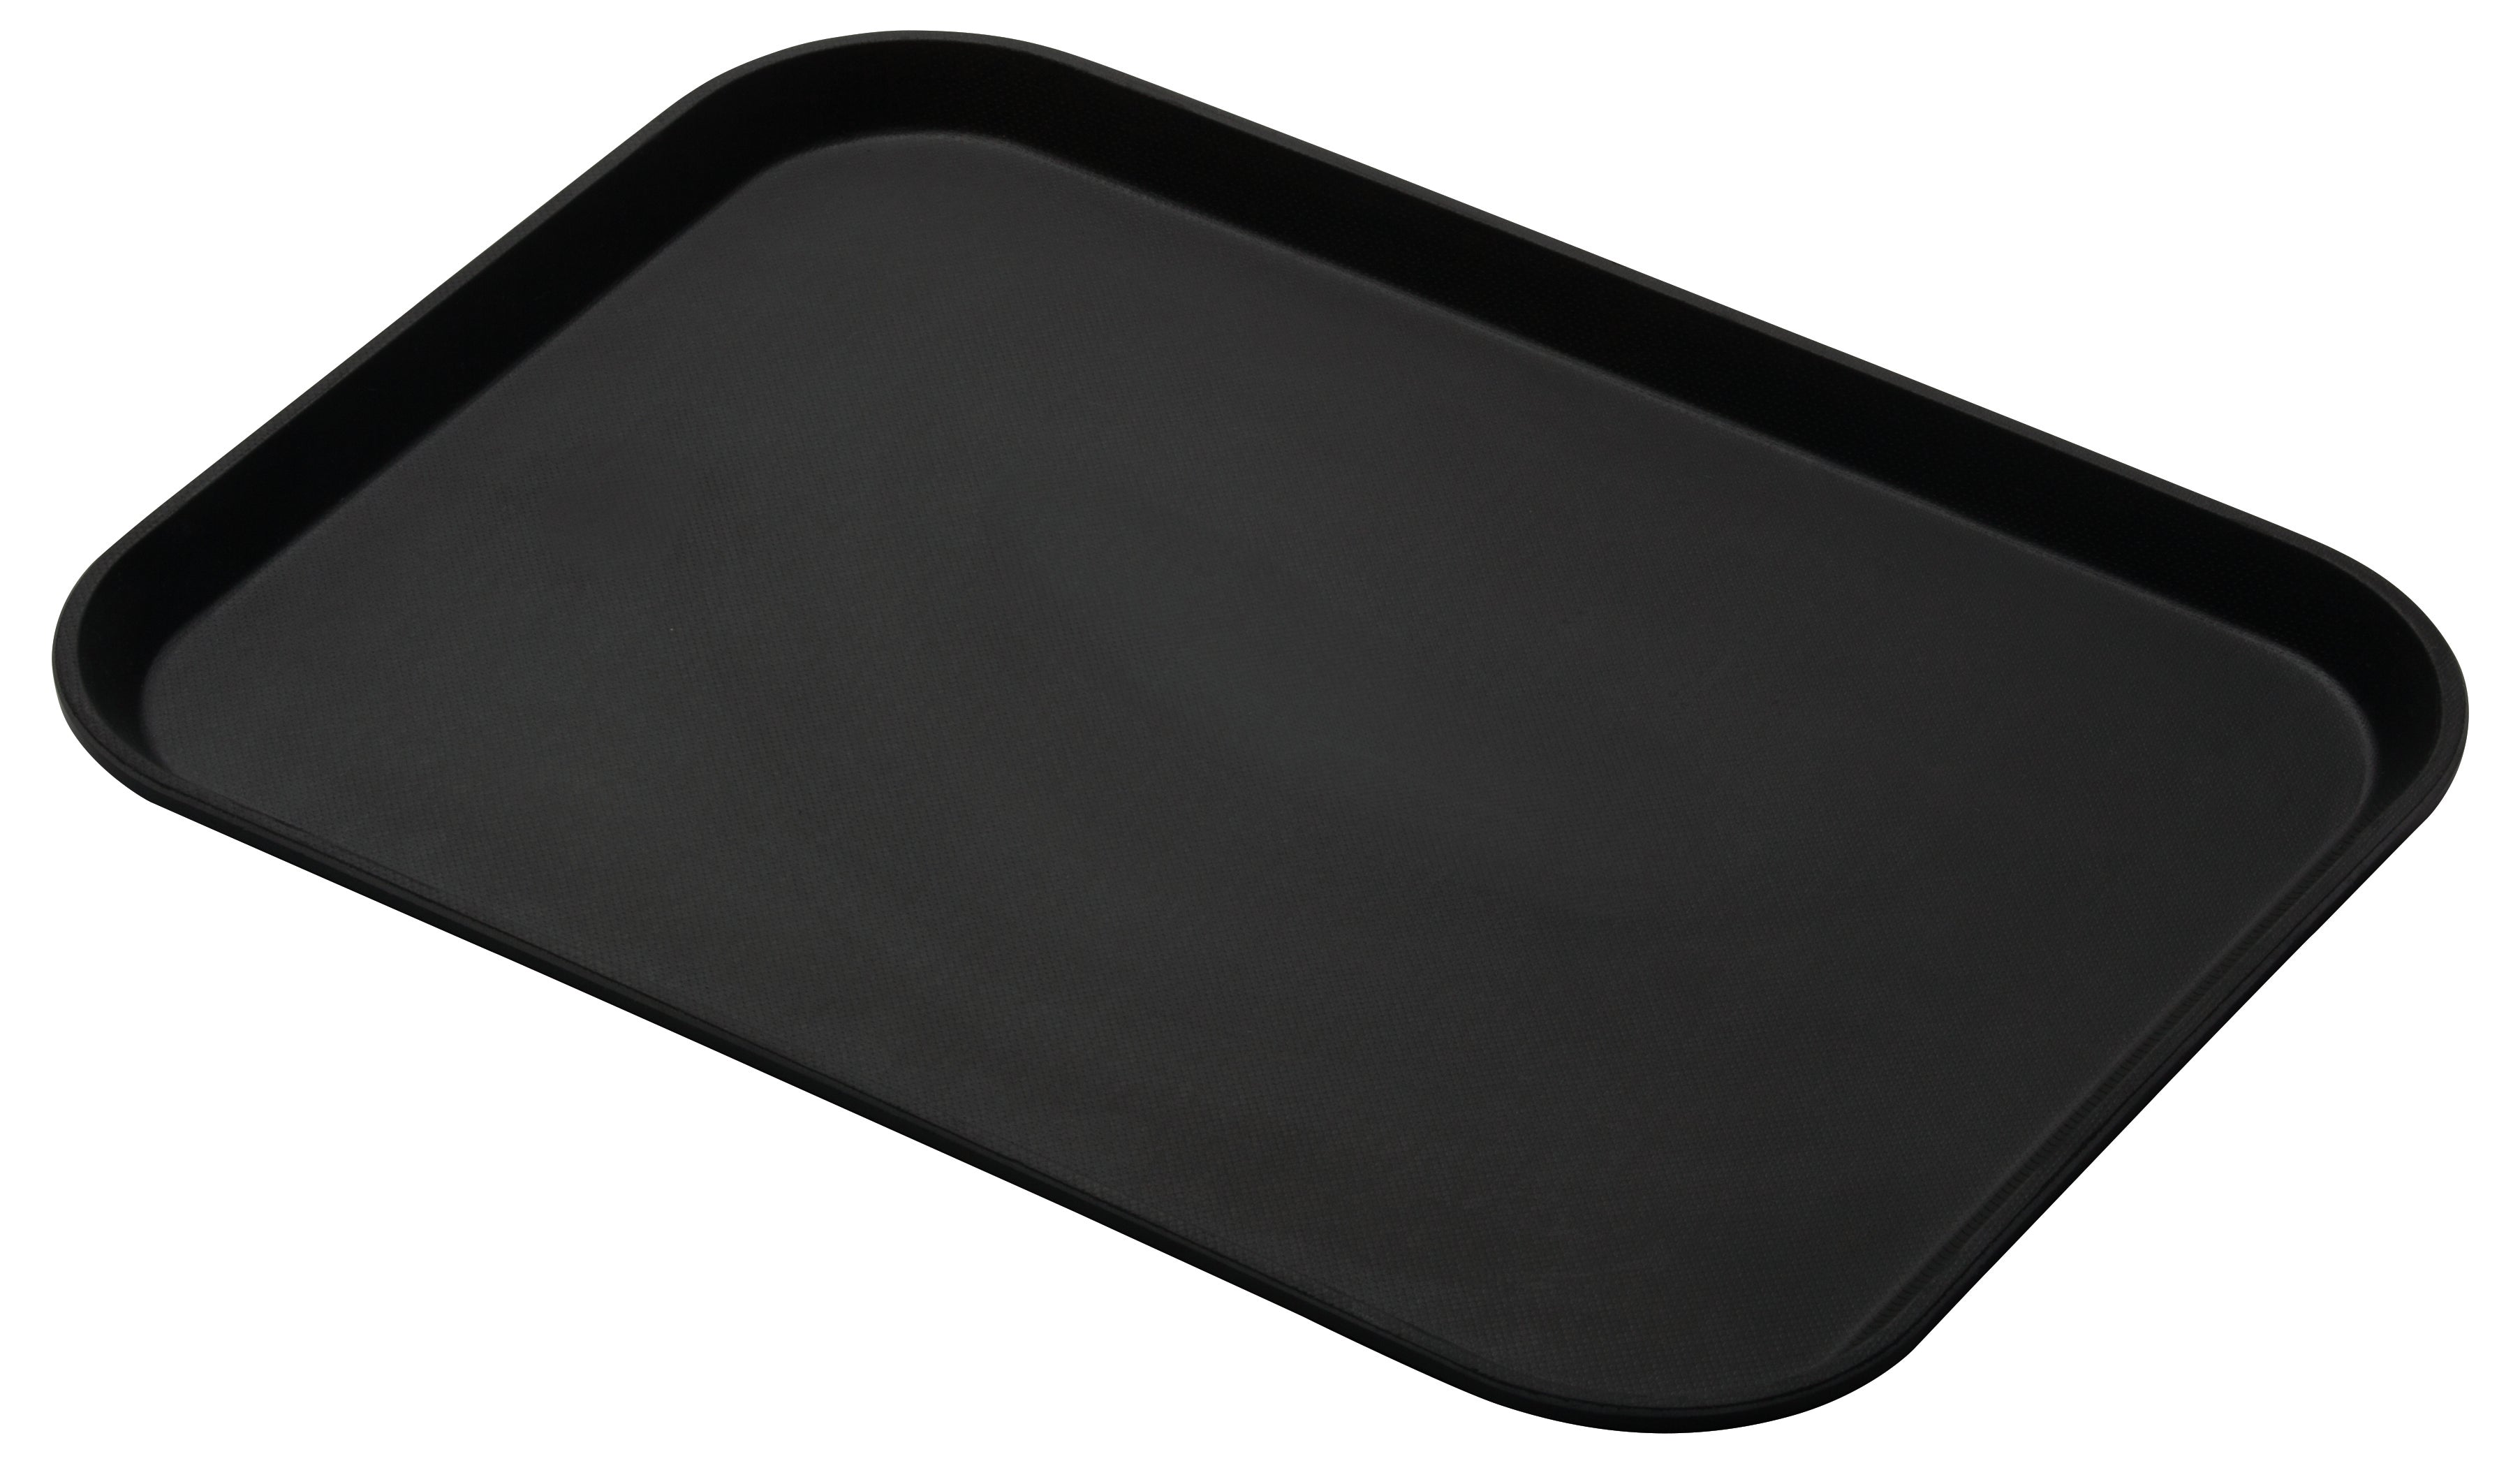 Cambro Camtread® Fiberglass Tablett mit rutschfester Gummioberfläche, rechteckig – hohes Profil 27 cm, 12 Stück im Karton - 1014CT110